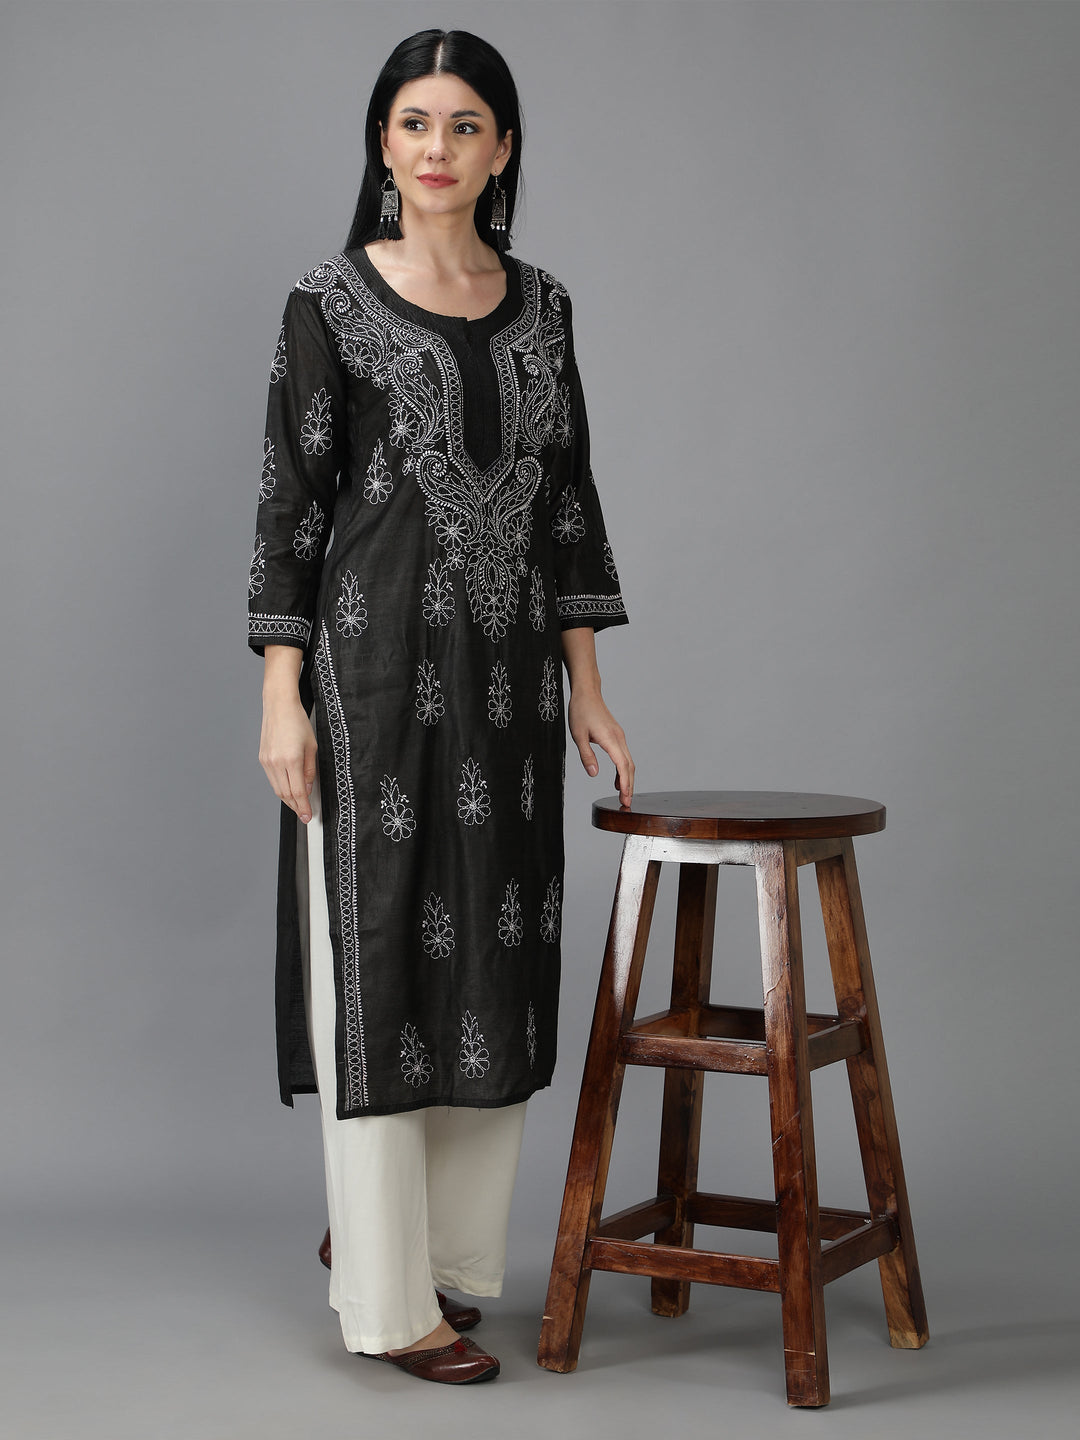 Black-Chanderi-Kurta-in-White-Embroidery